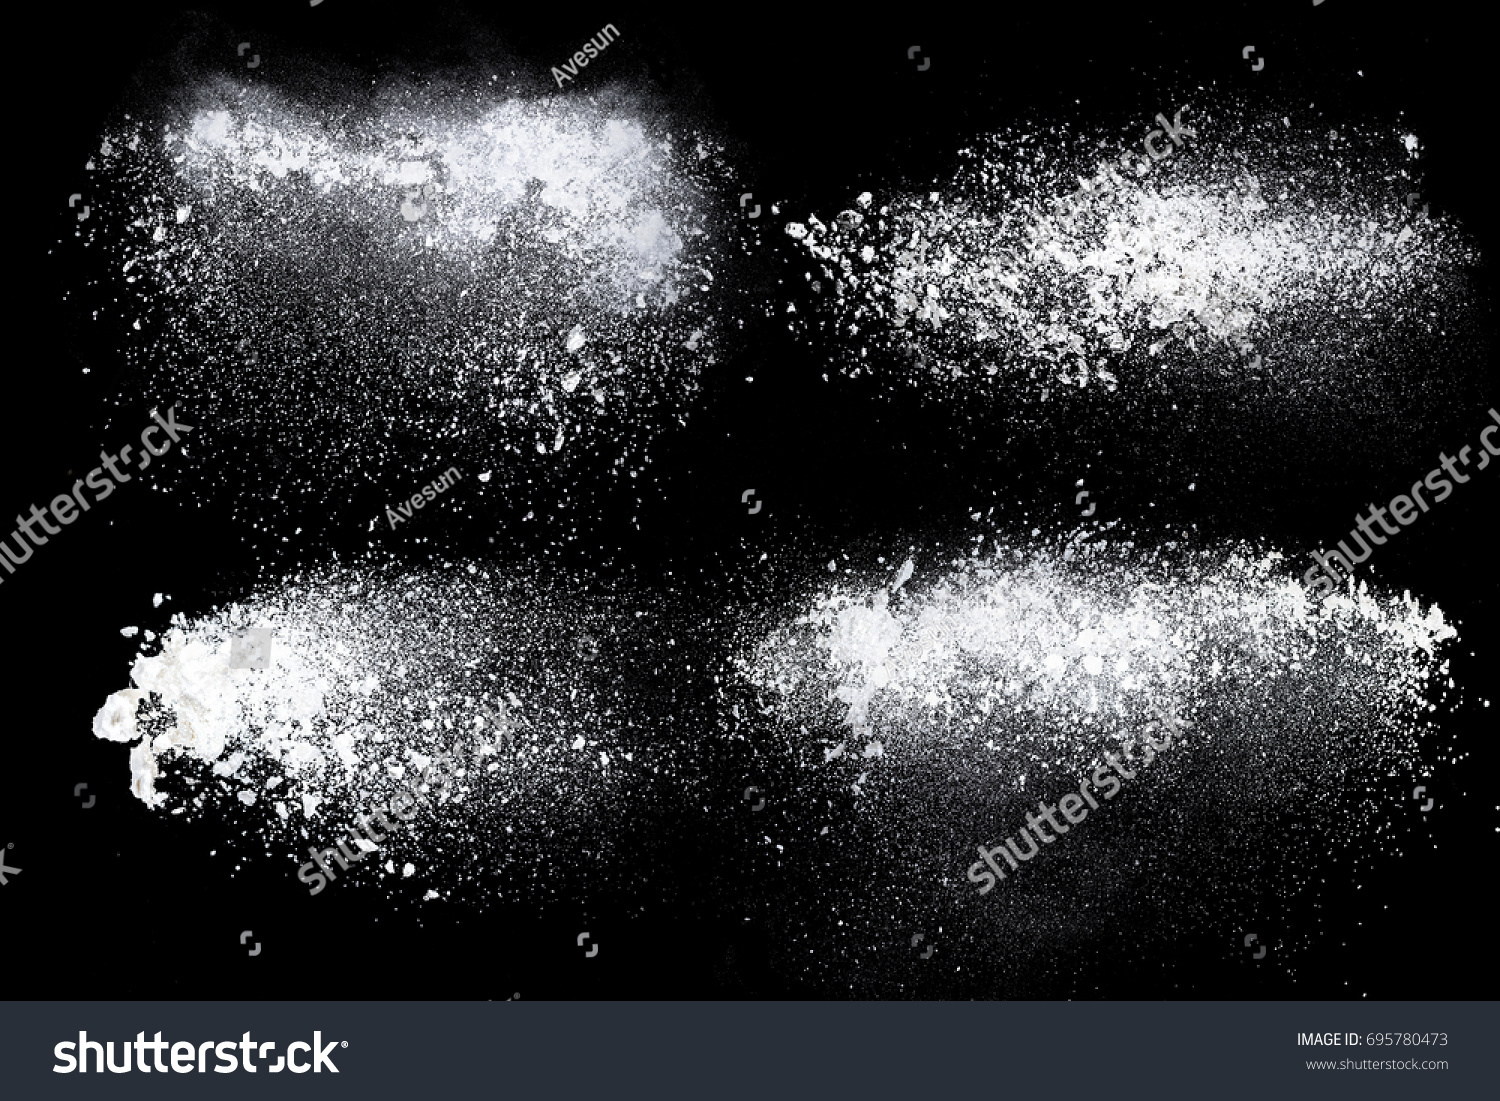 Set of dust powder splash clouds isolated on black background #695780473